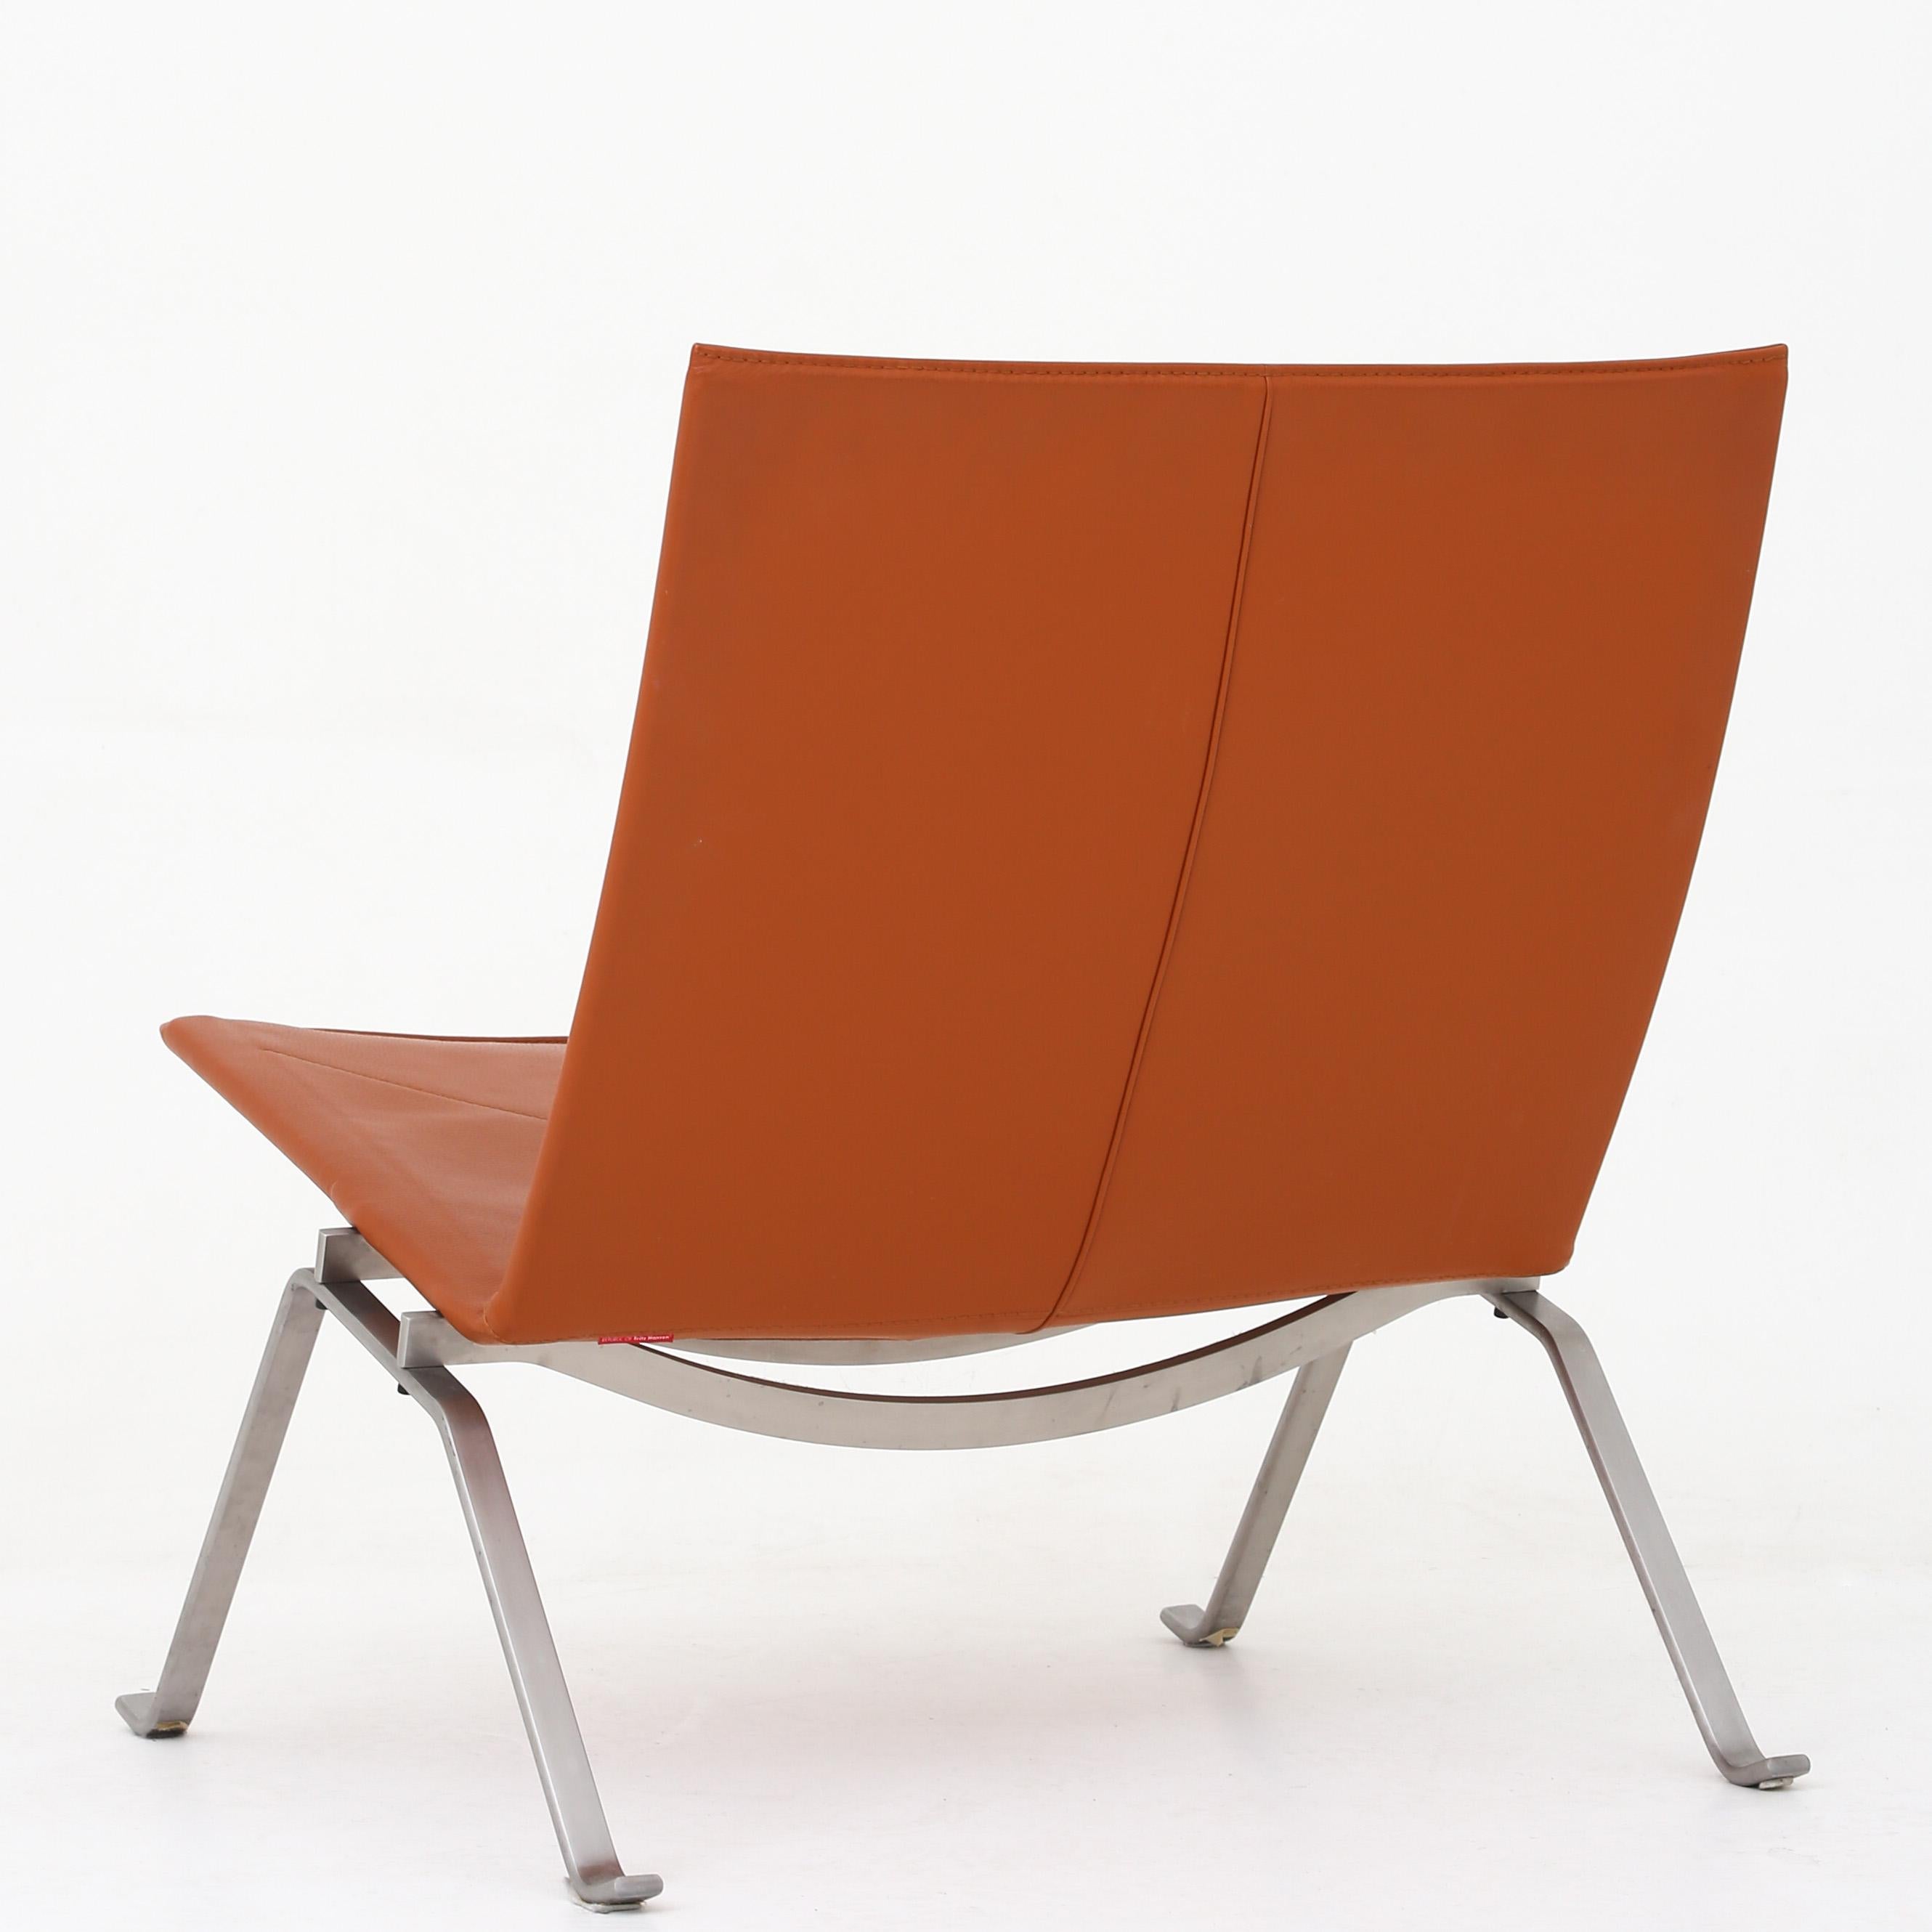 Poul Kjærholm PK 22 - Easy chair in original red-brown leather on steel frame. Maker Fritz Hansen.